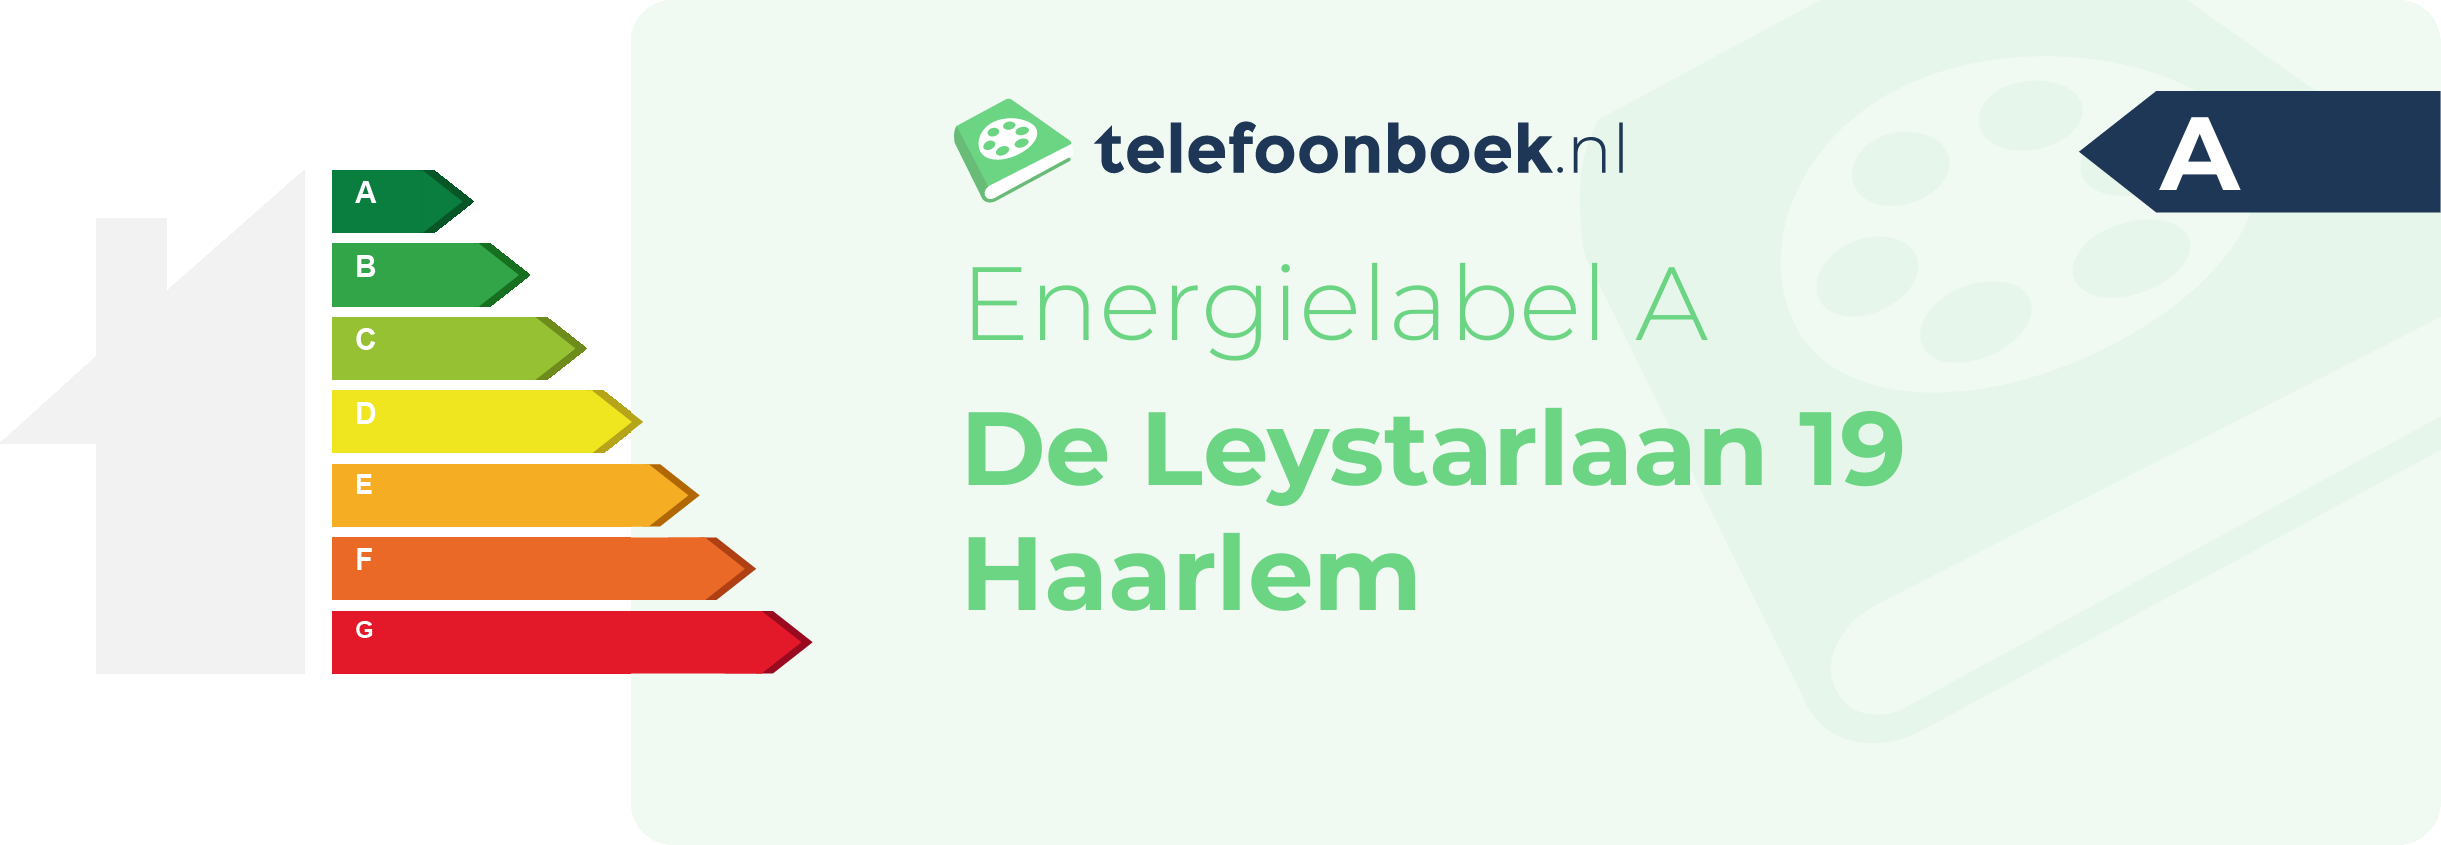 Energielabel De Leystarlaan 19 Haarlem